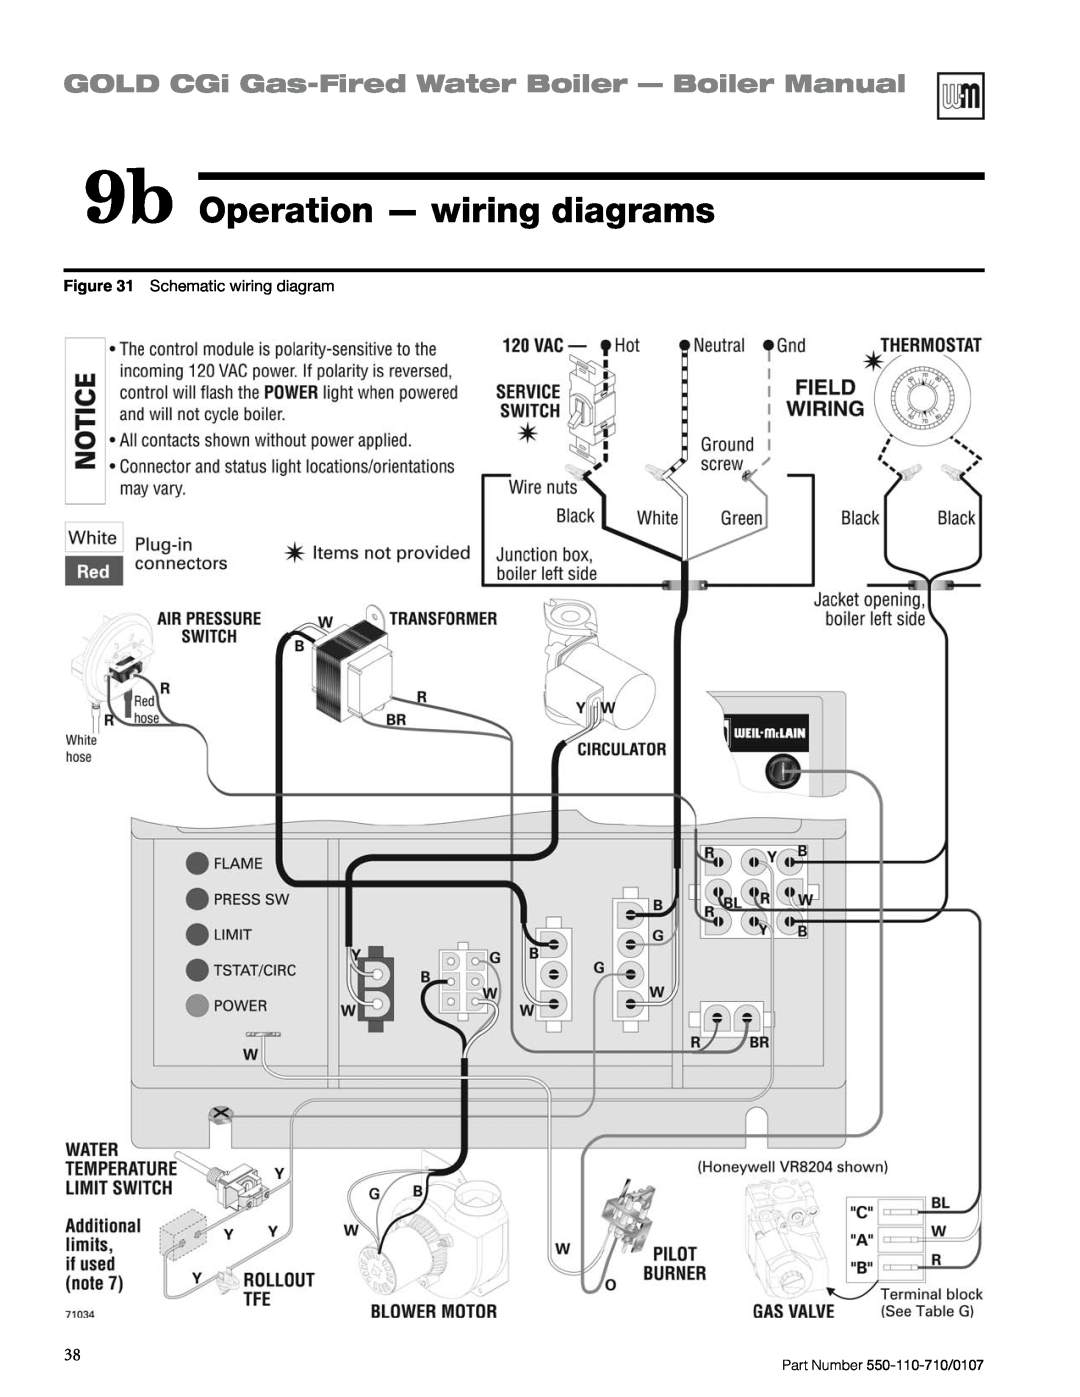 Weil-McLain Series 2 manual 9b Operation — wiring diagrams, GOLD CGi Gas-FiredWater Boiler — Boiler Manual 